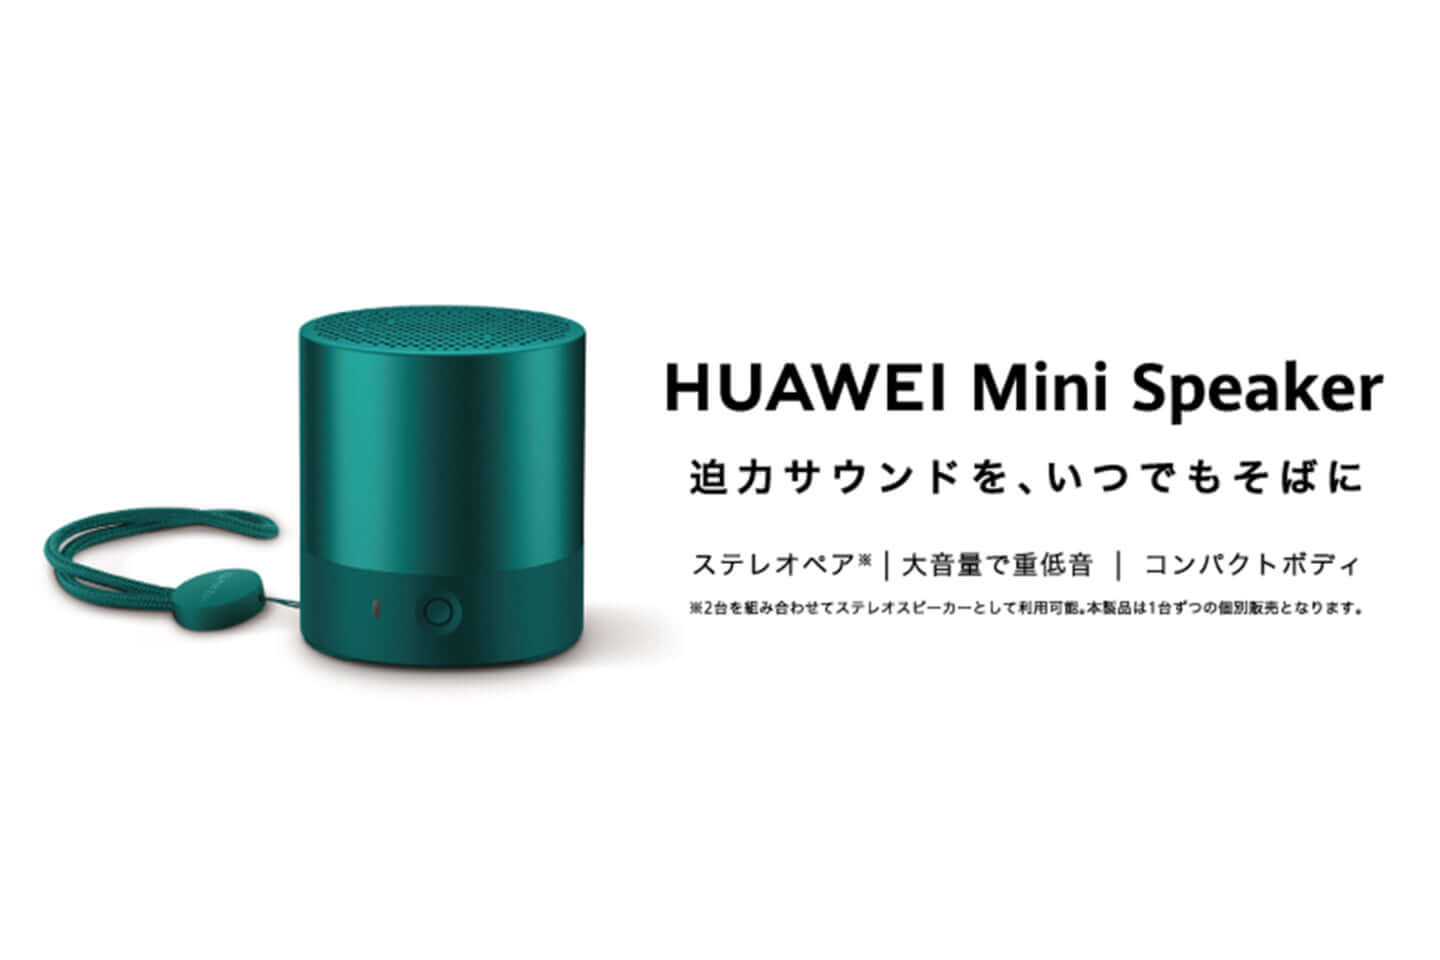 101gのコンパクトボディでも重低音抜群！ステレオペアリング対応のワイヤレススピーカー「HUAWEI Mini Speaker」が発売 minispeaker-1440x960